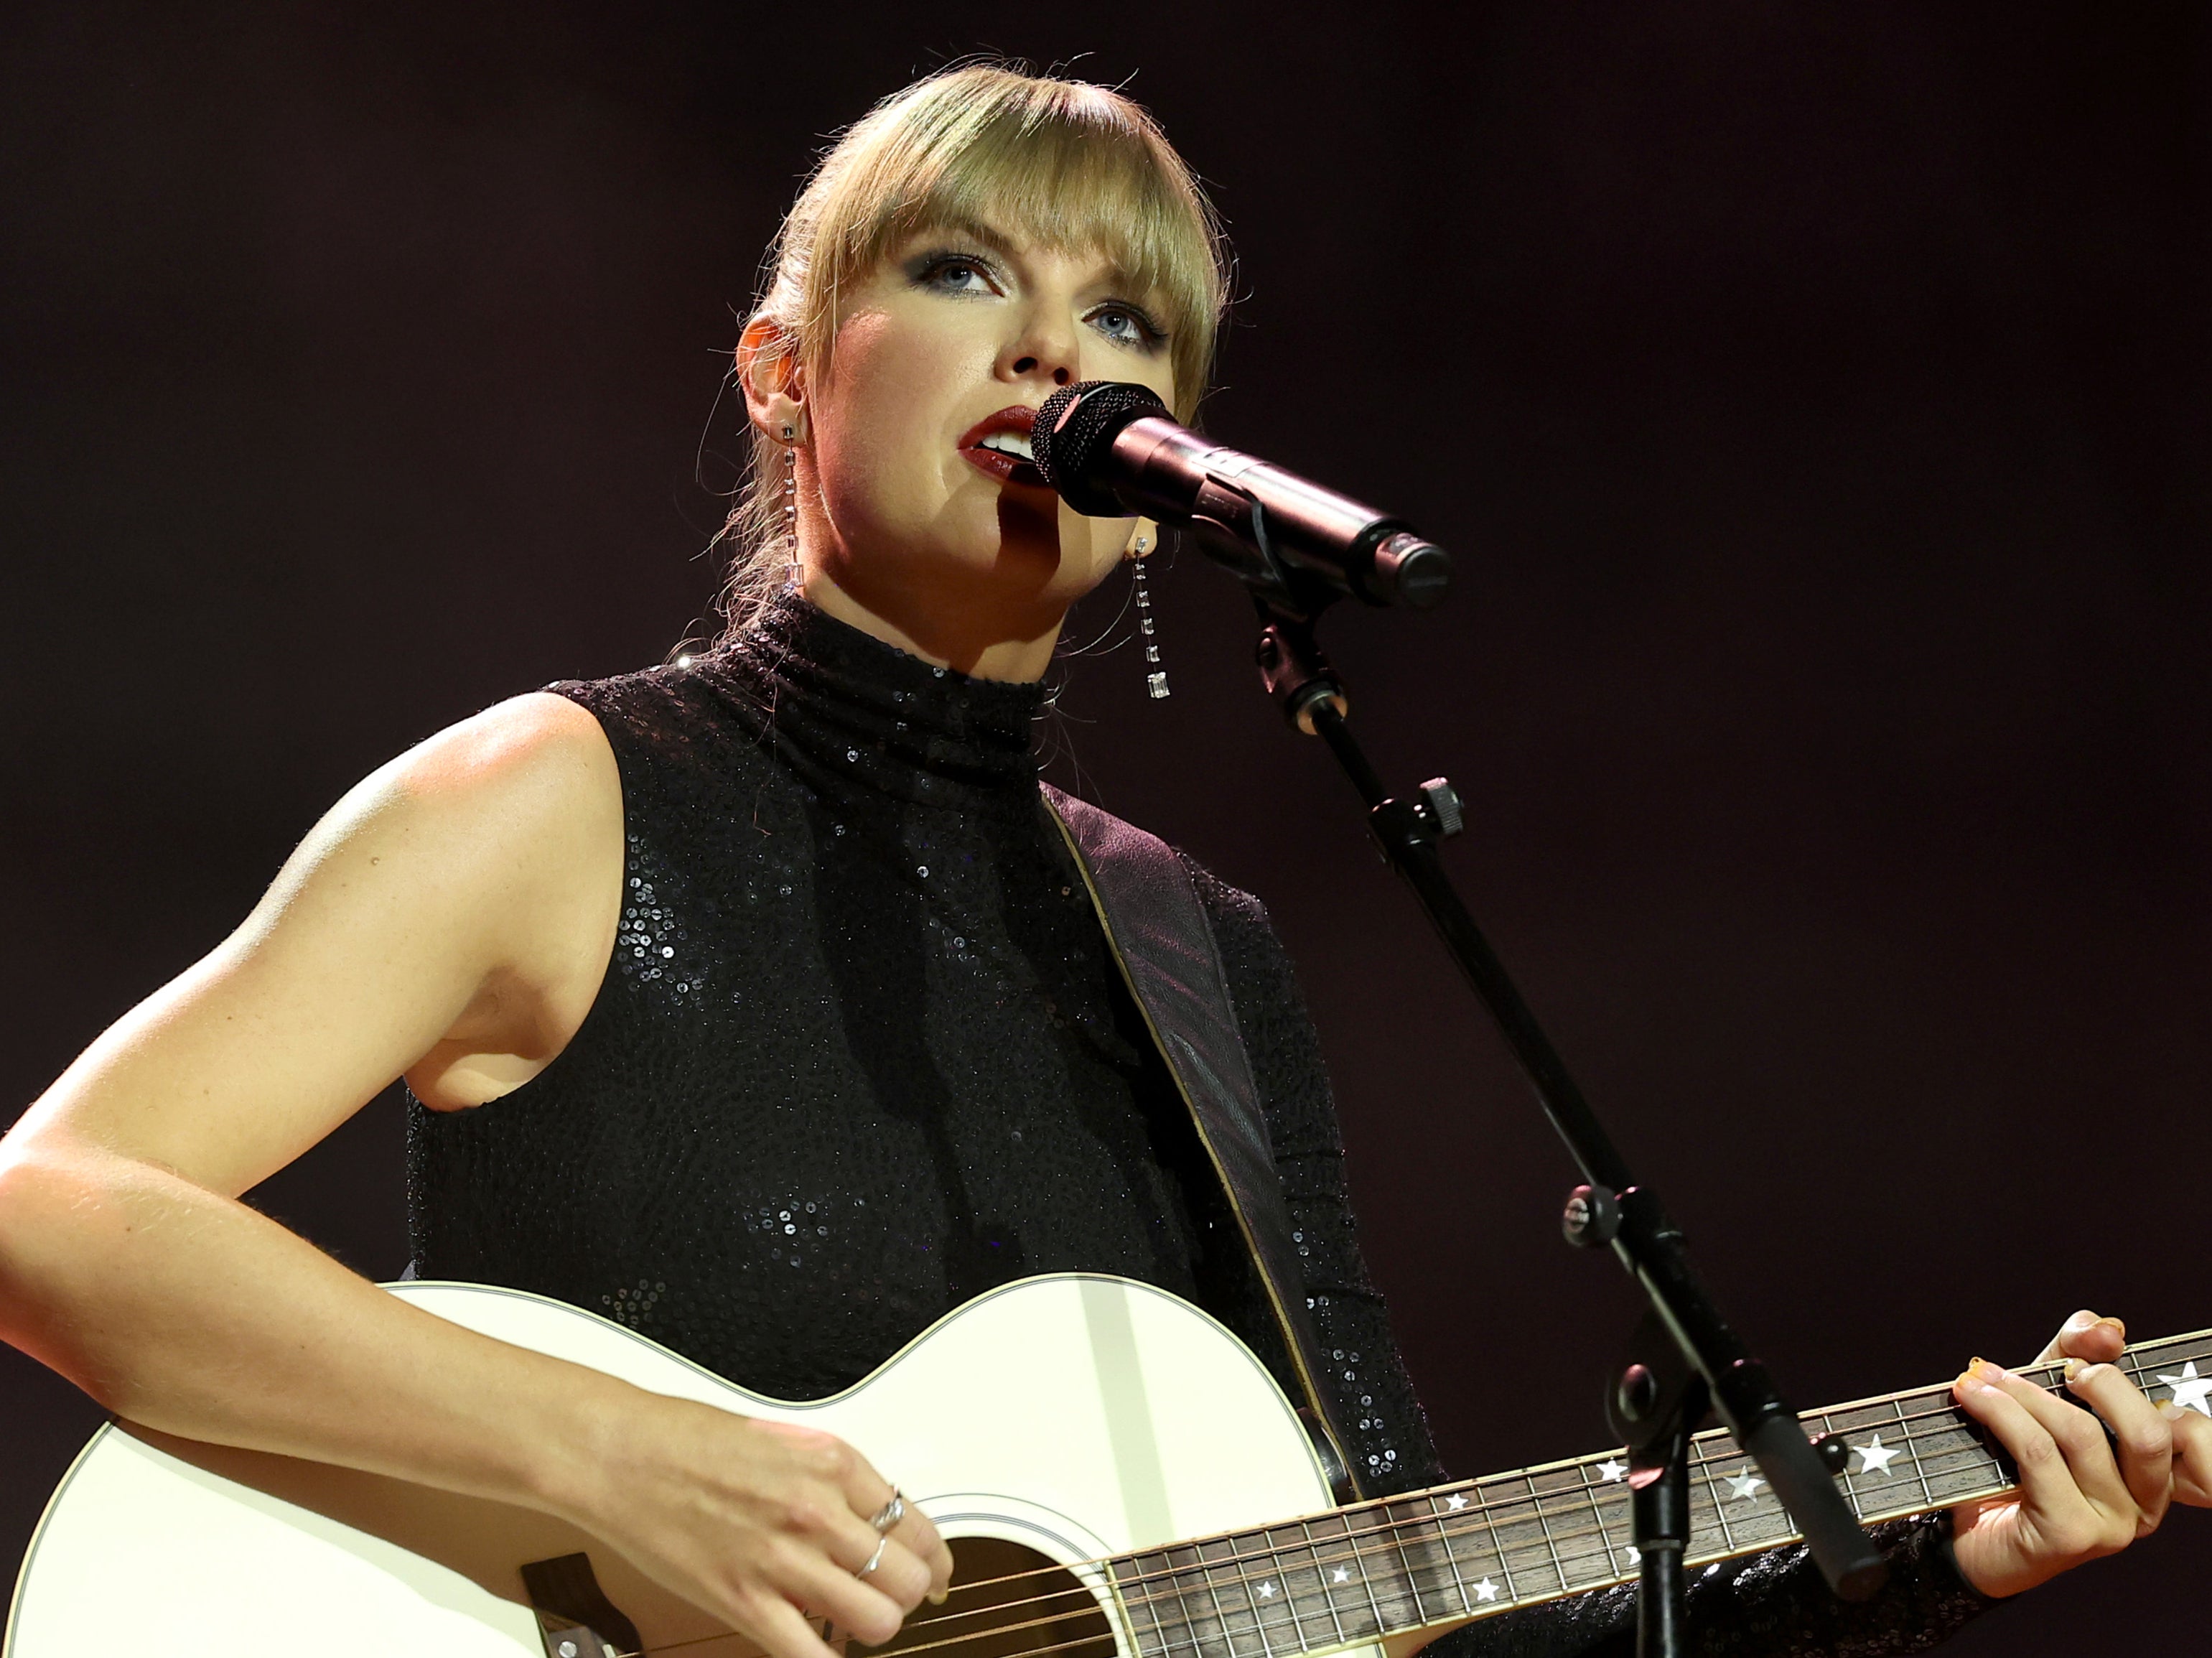 Swift last toured the UK in 2018